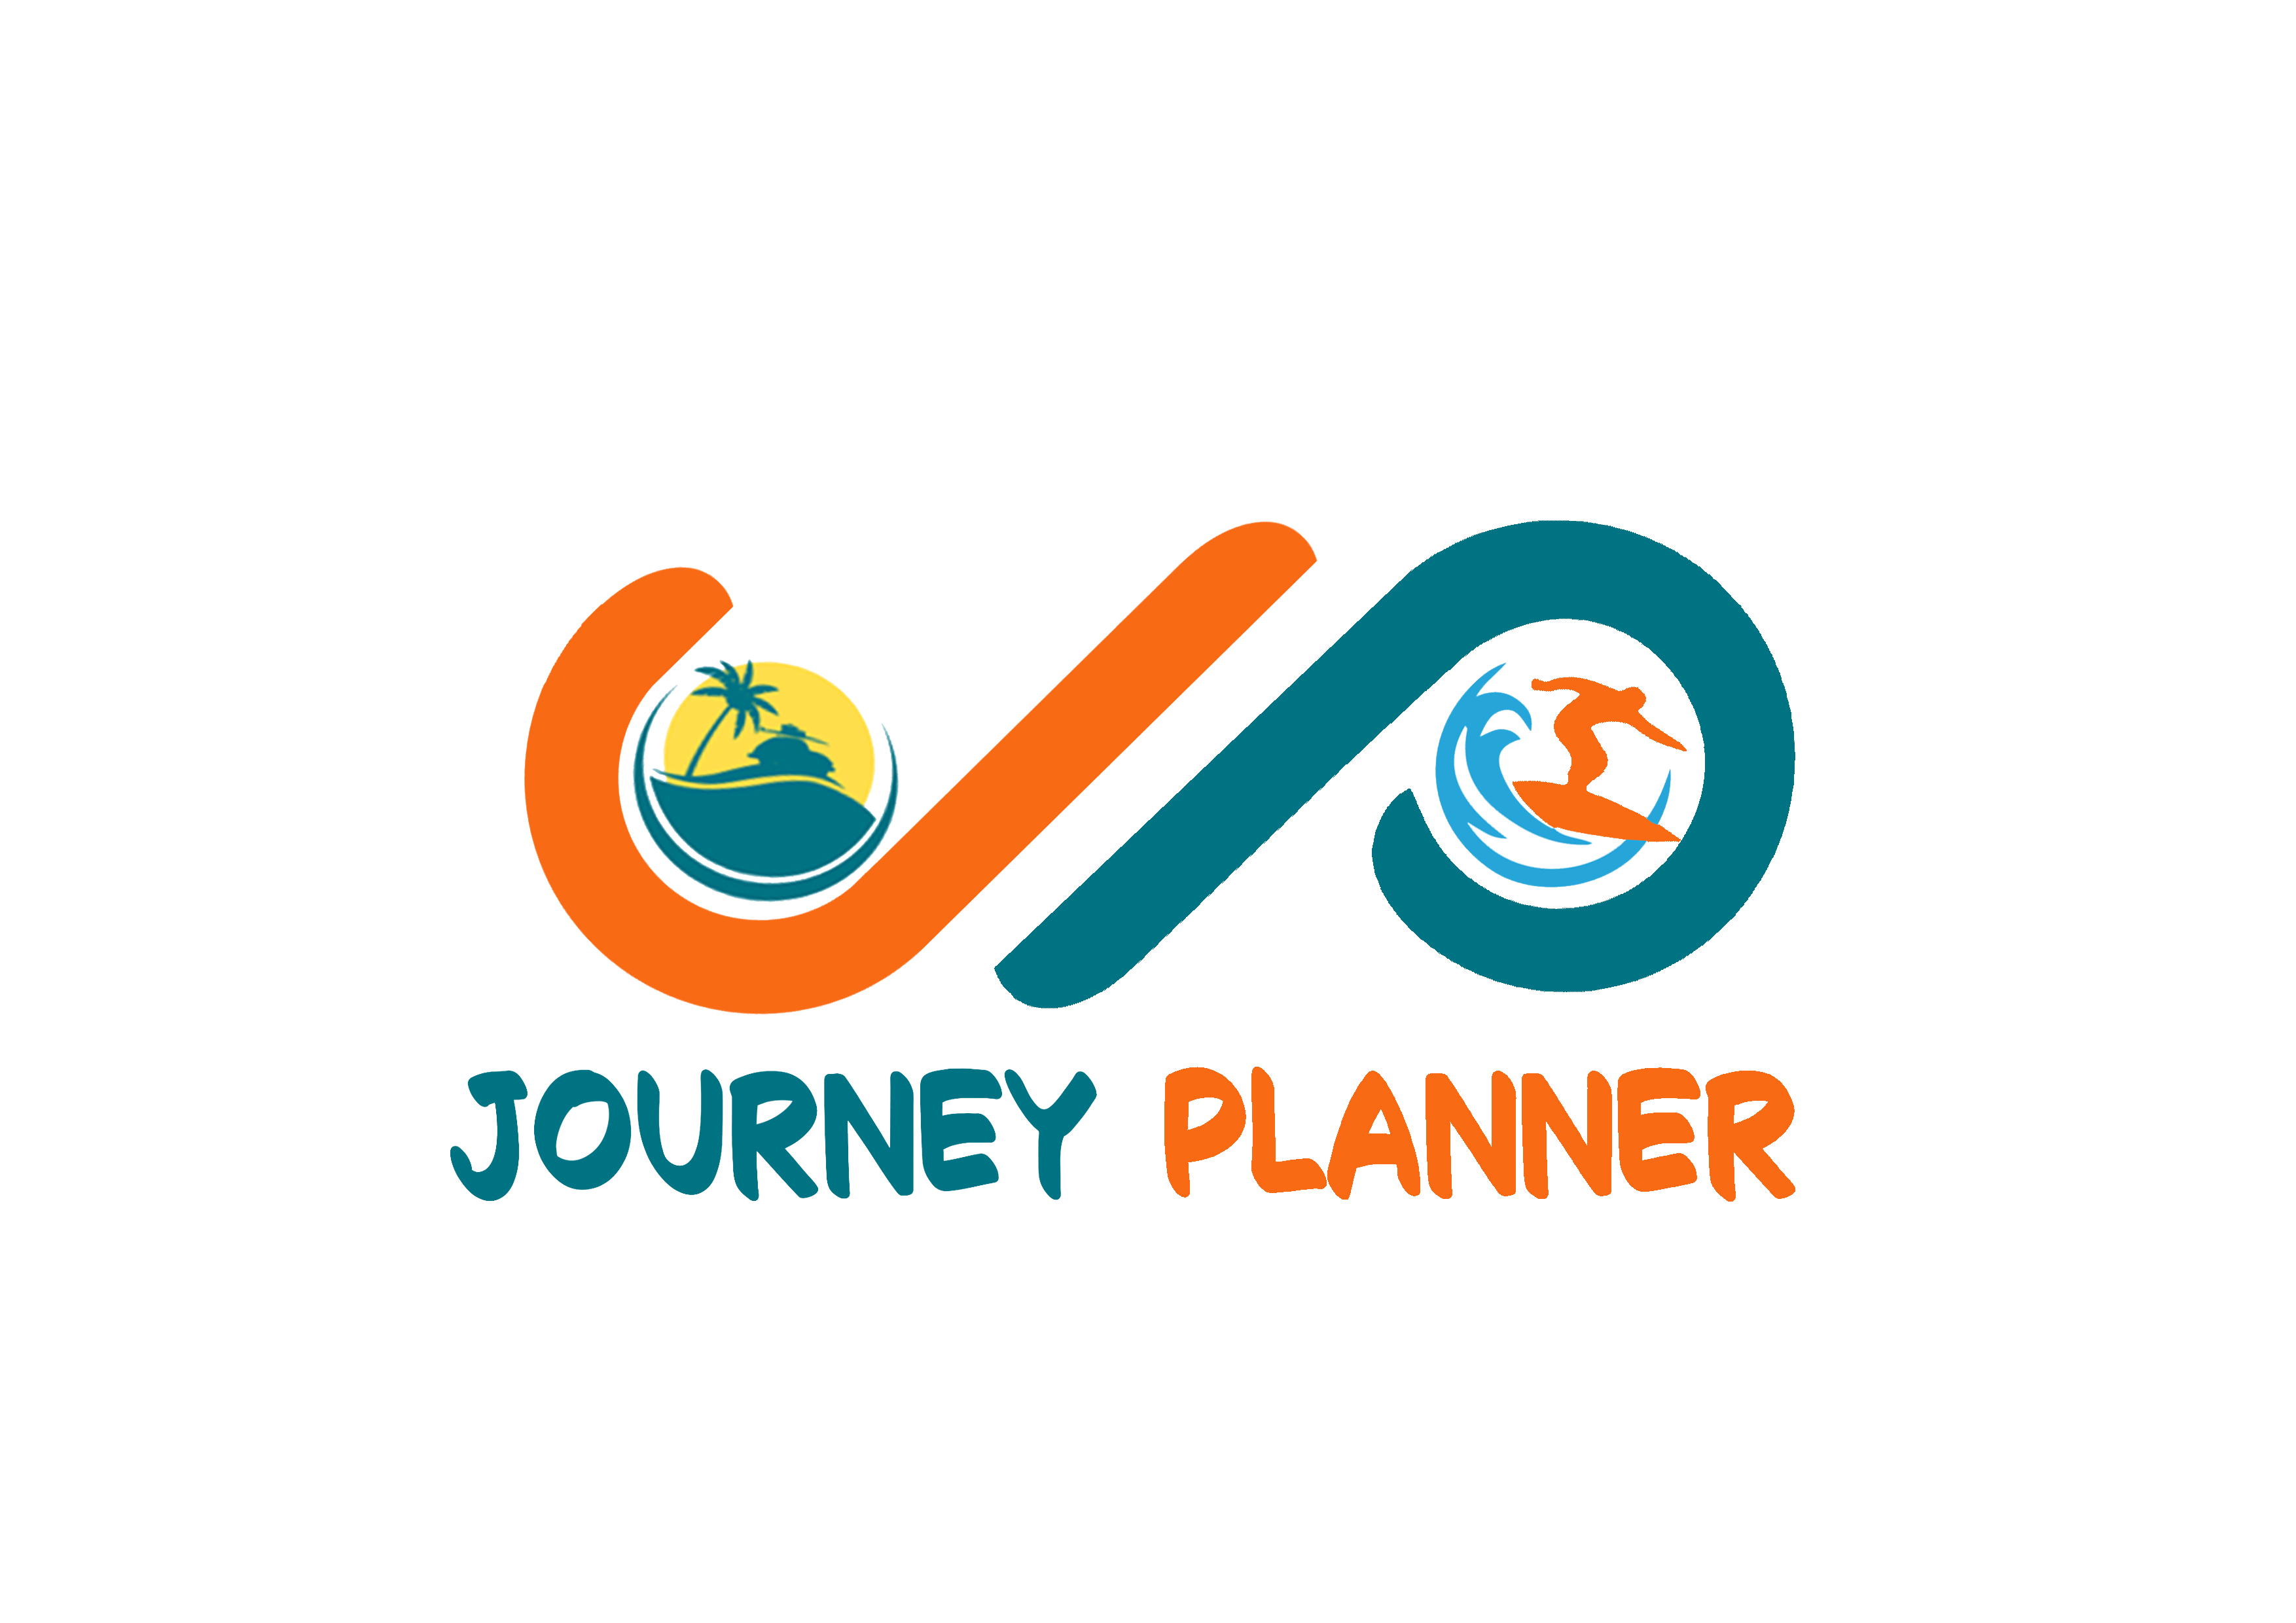 Journey planner